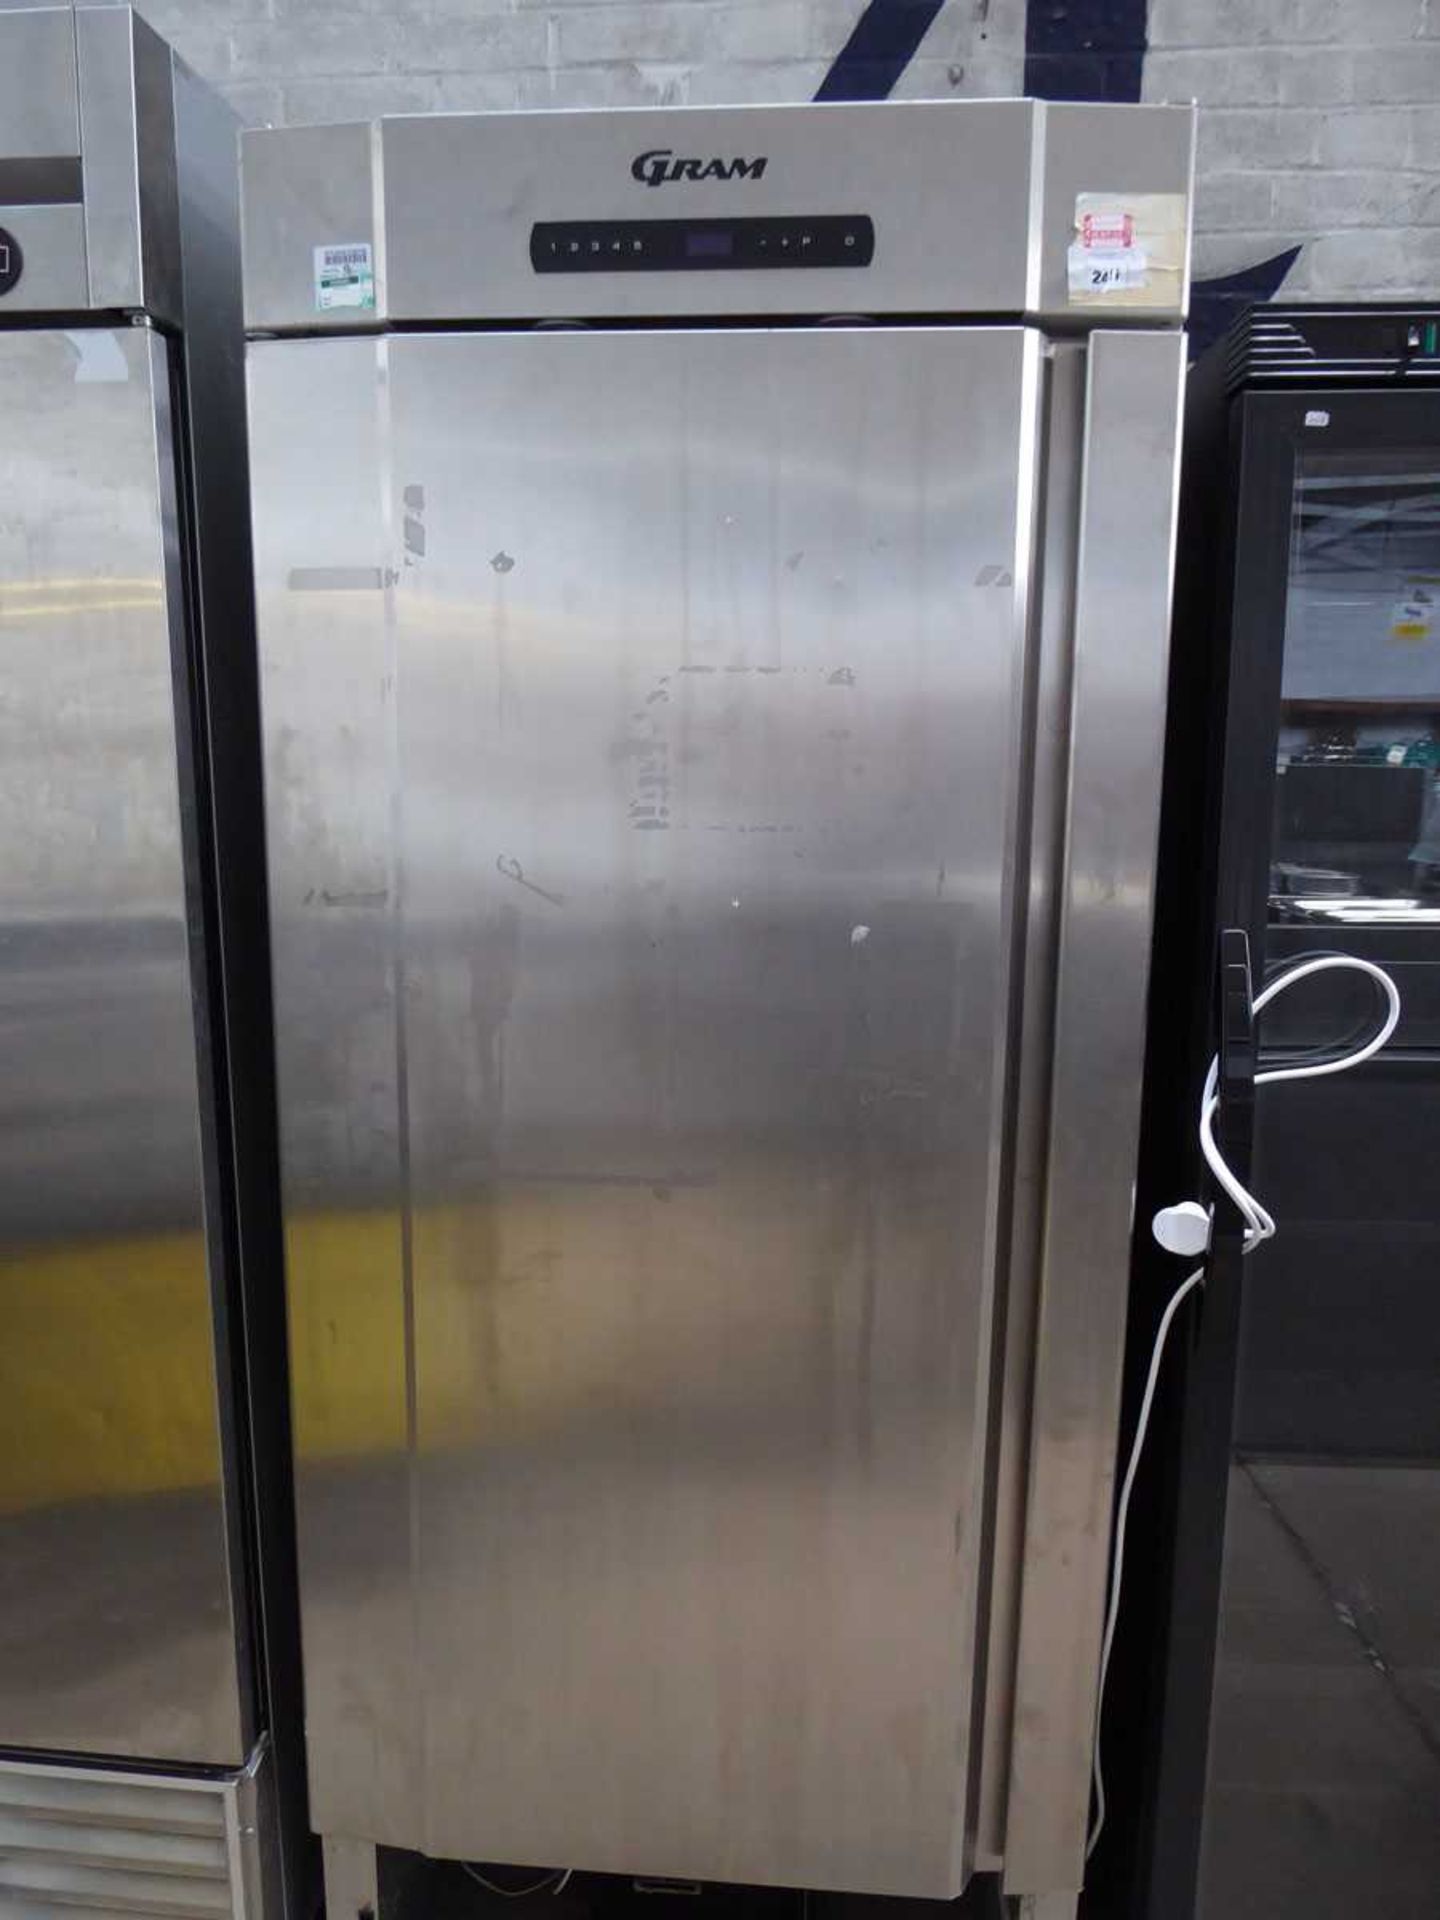 +VAT 80cm Gram single door refrigerated unit (Failed electrical test)